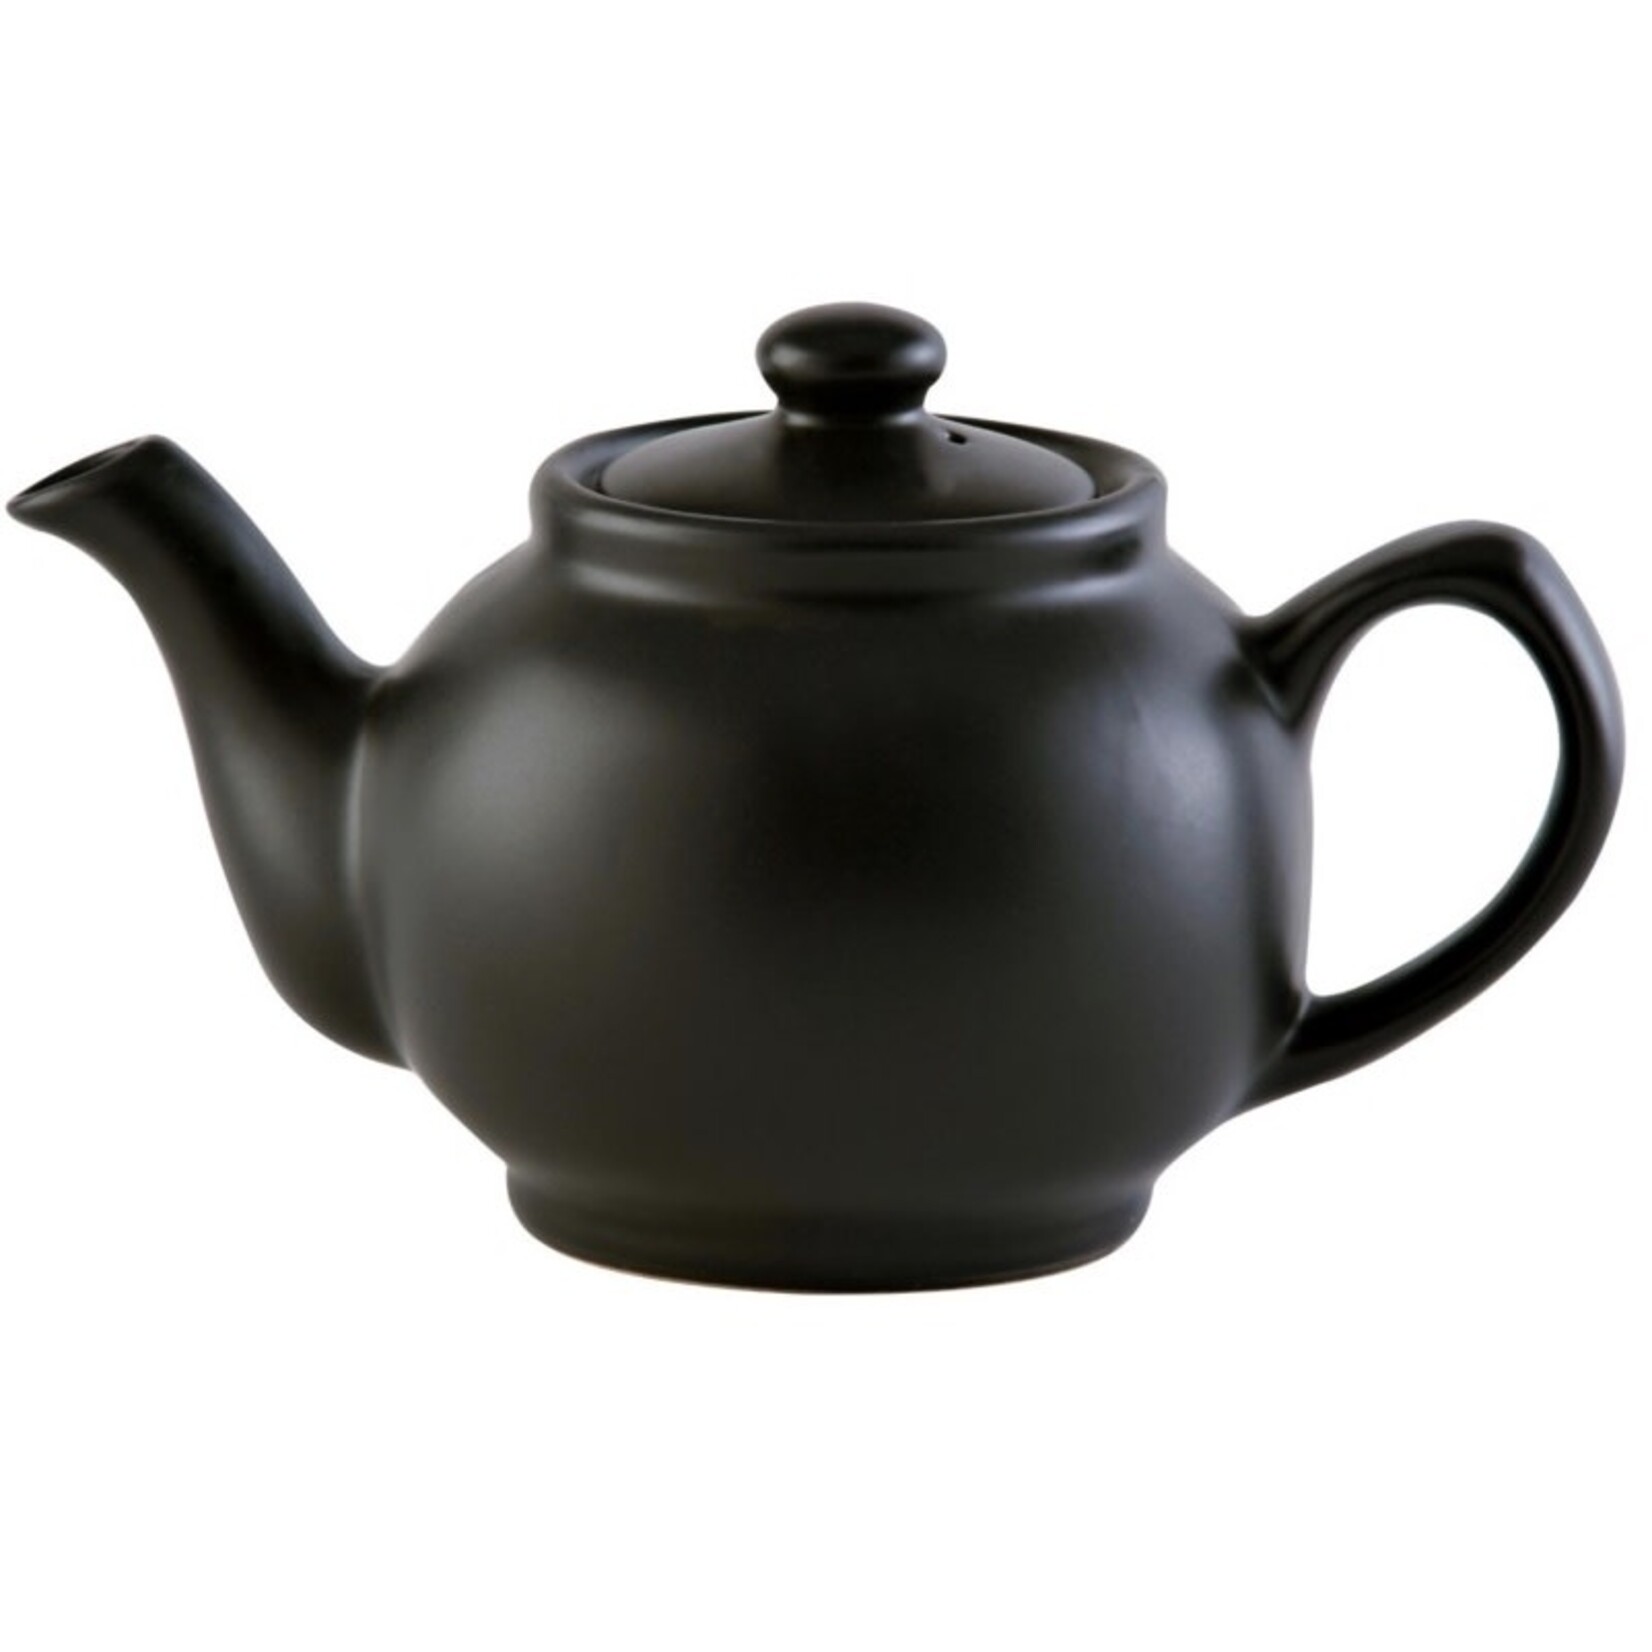 PRICE & KENSINGTON PRICE & KENSINGTON Matte Teapot 6 Cup Black